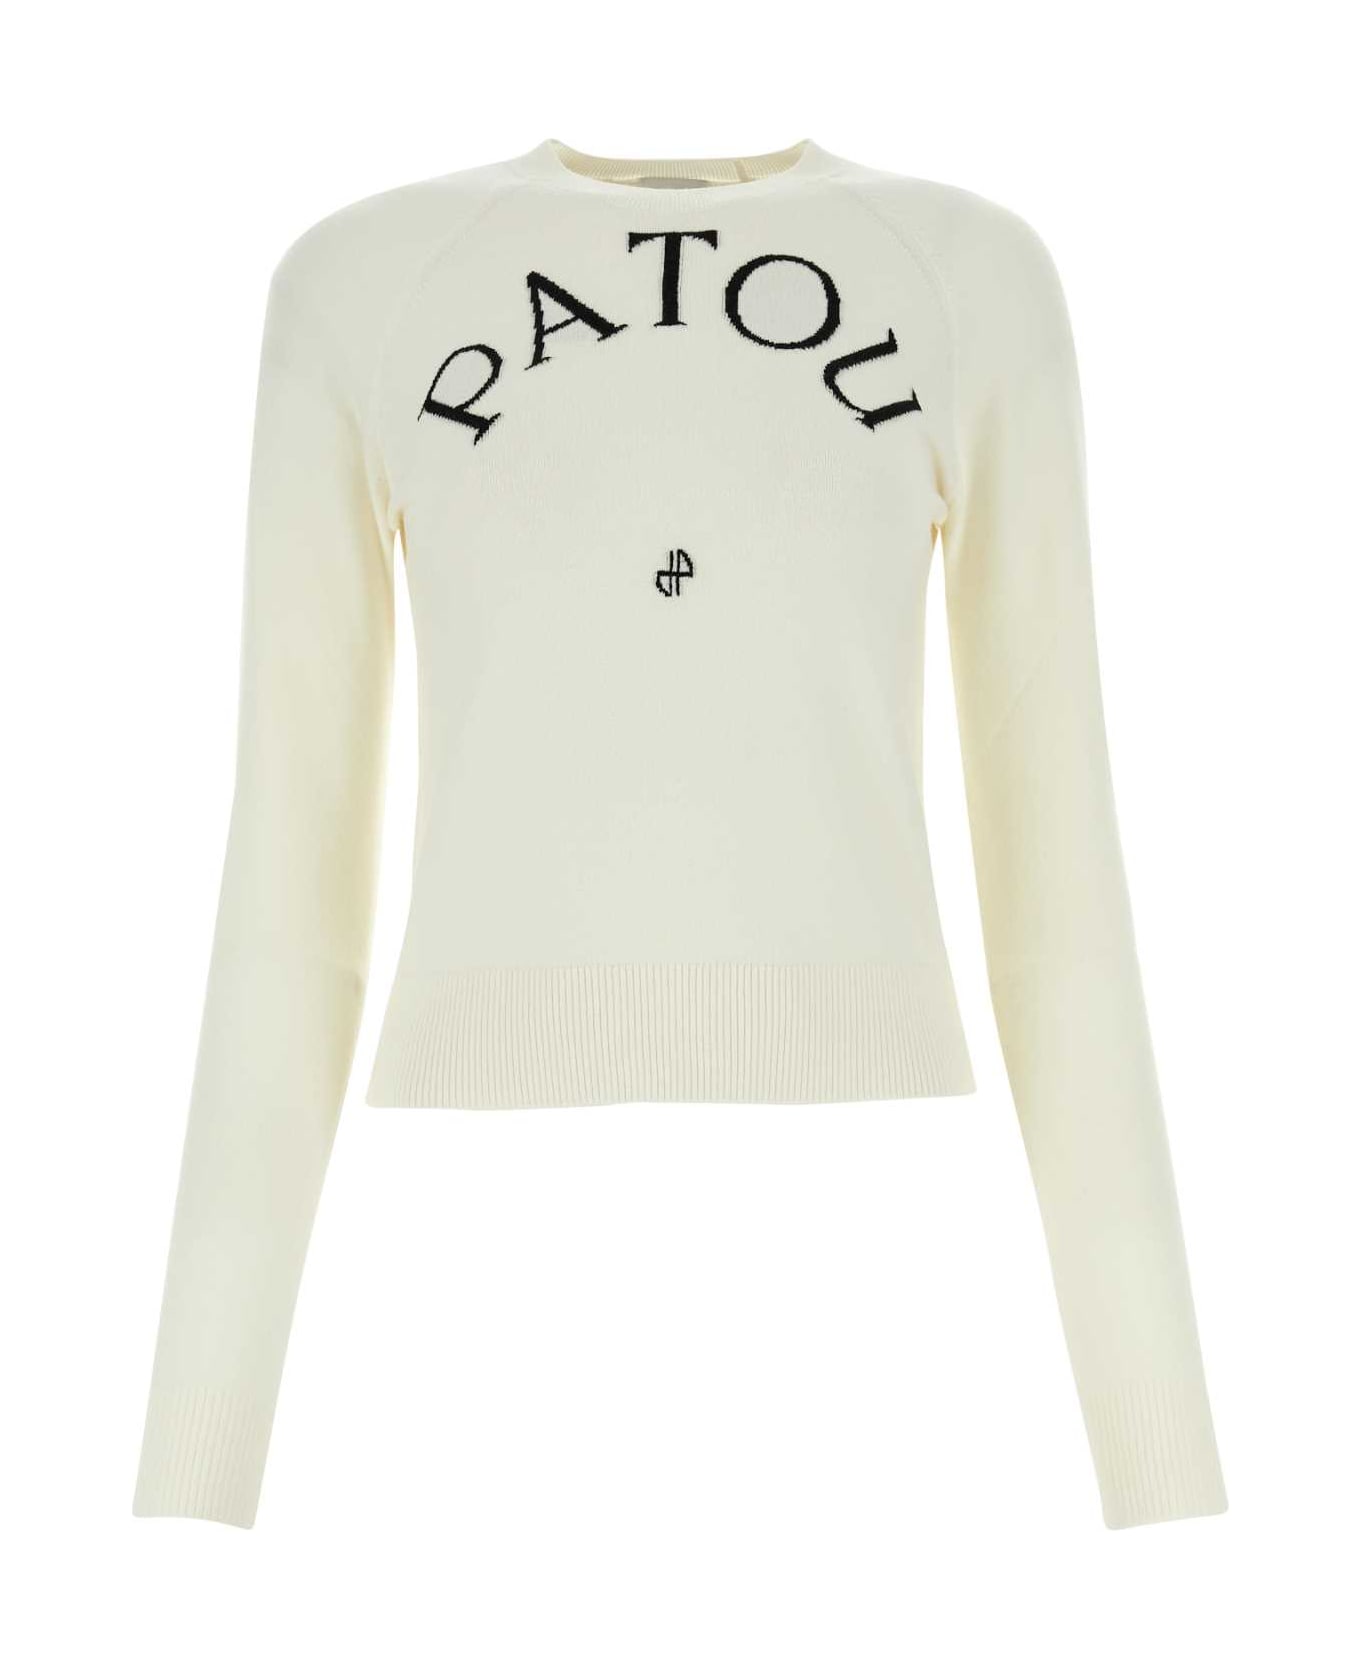 Patou White Wool Blend Sweater - WHITE ニットウェア